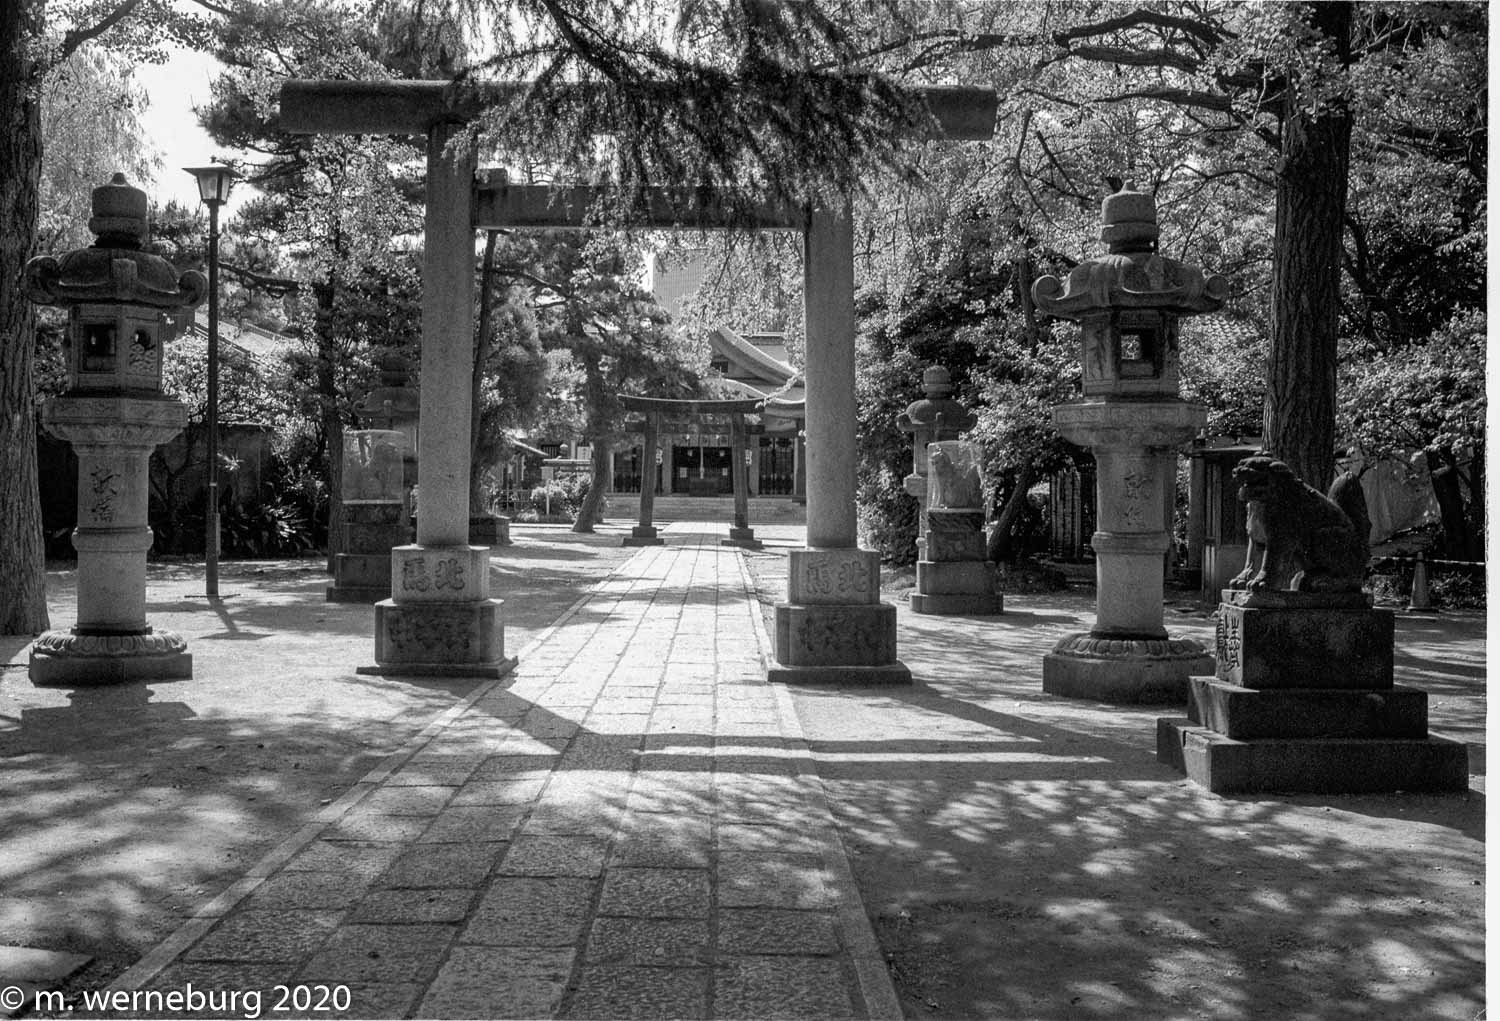 inner gates in Shinagawa shrine